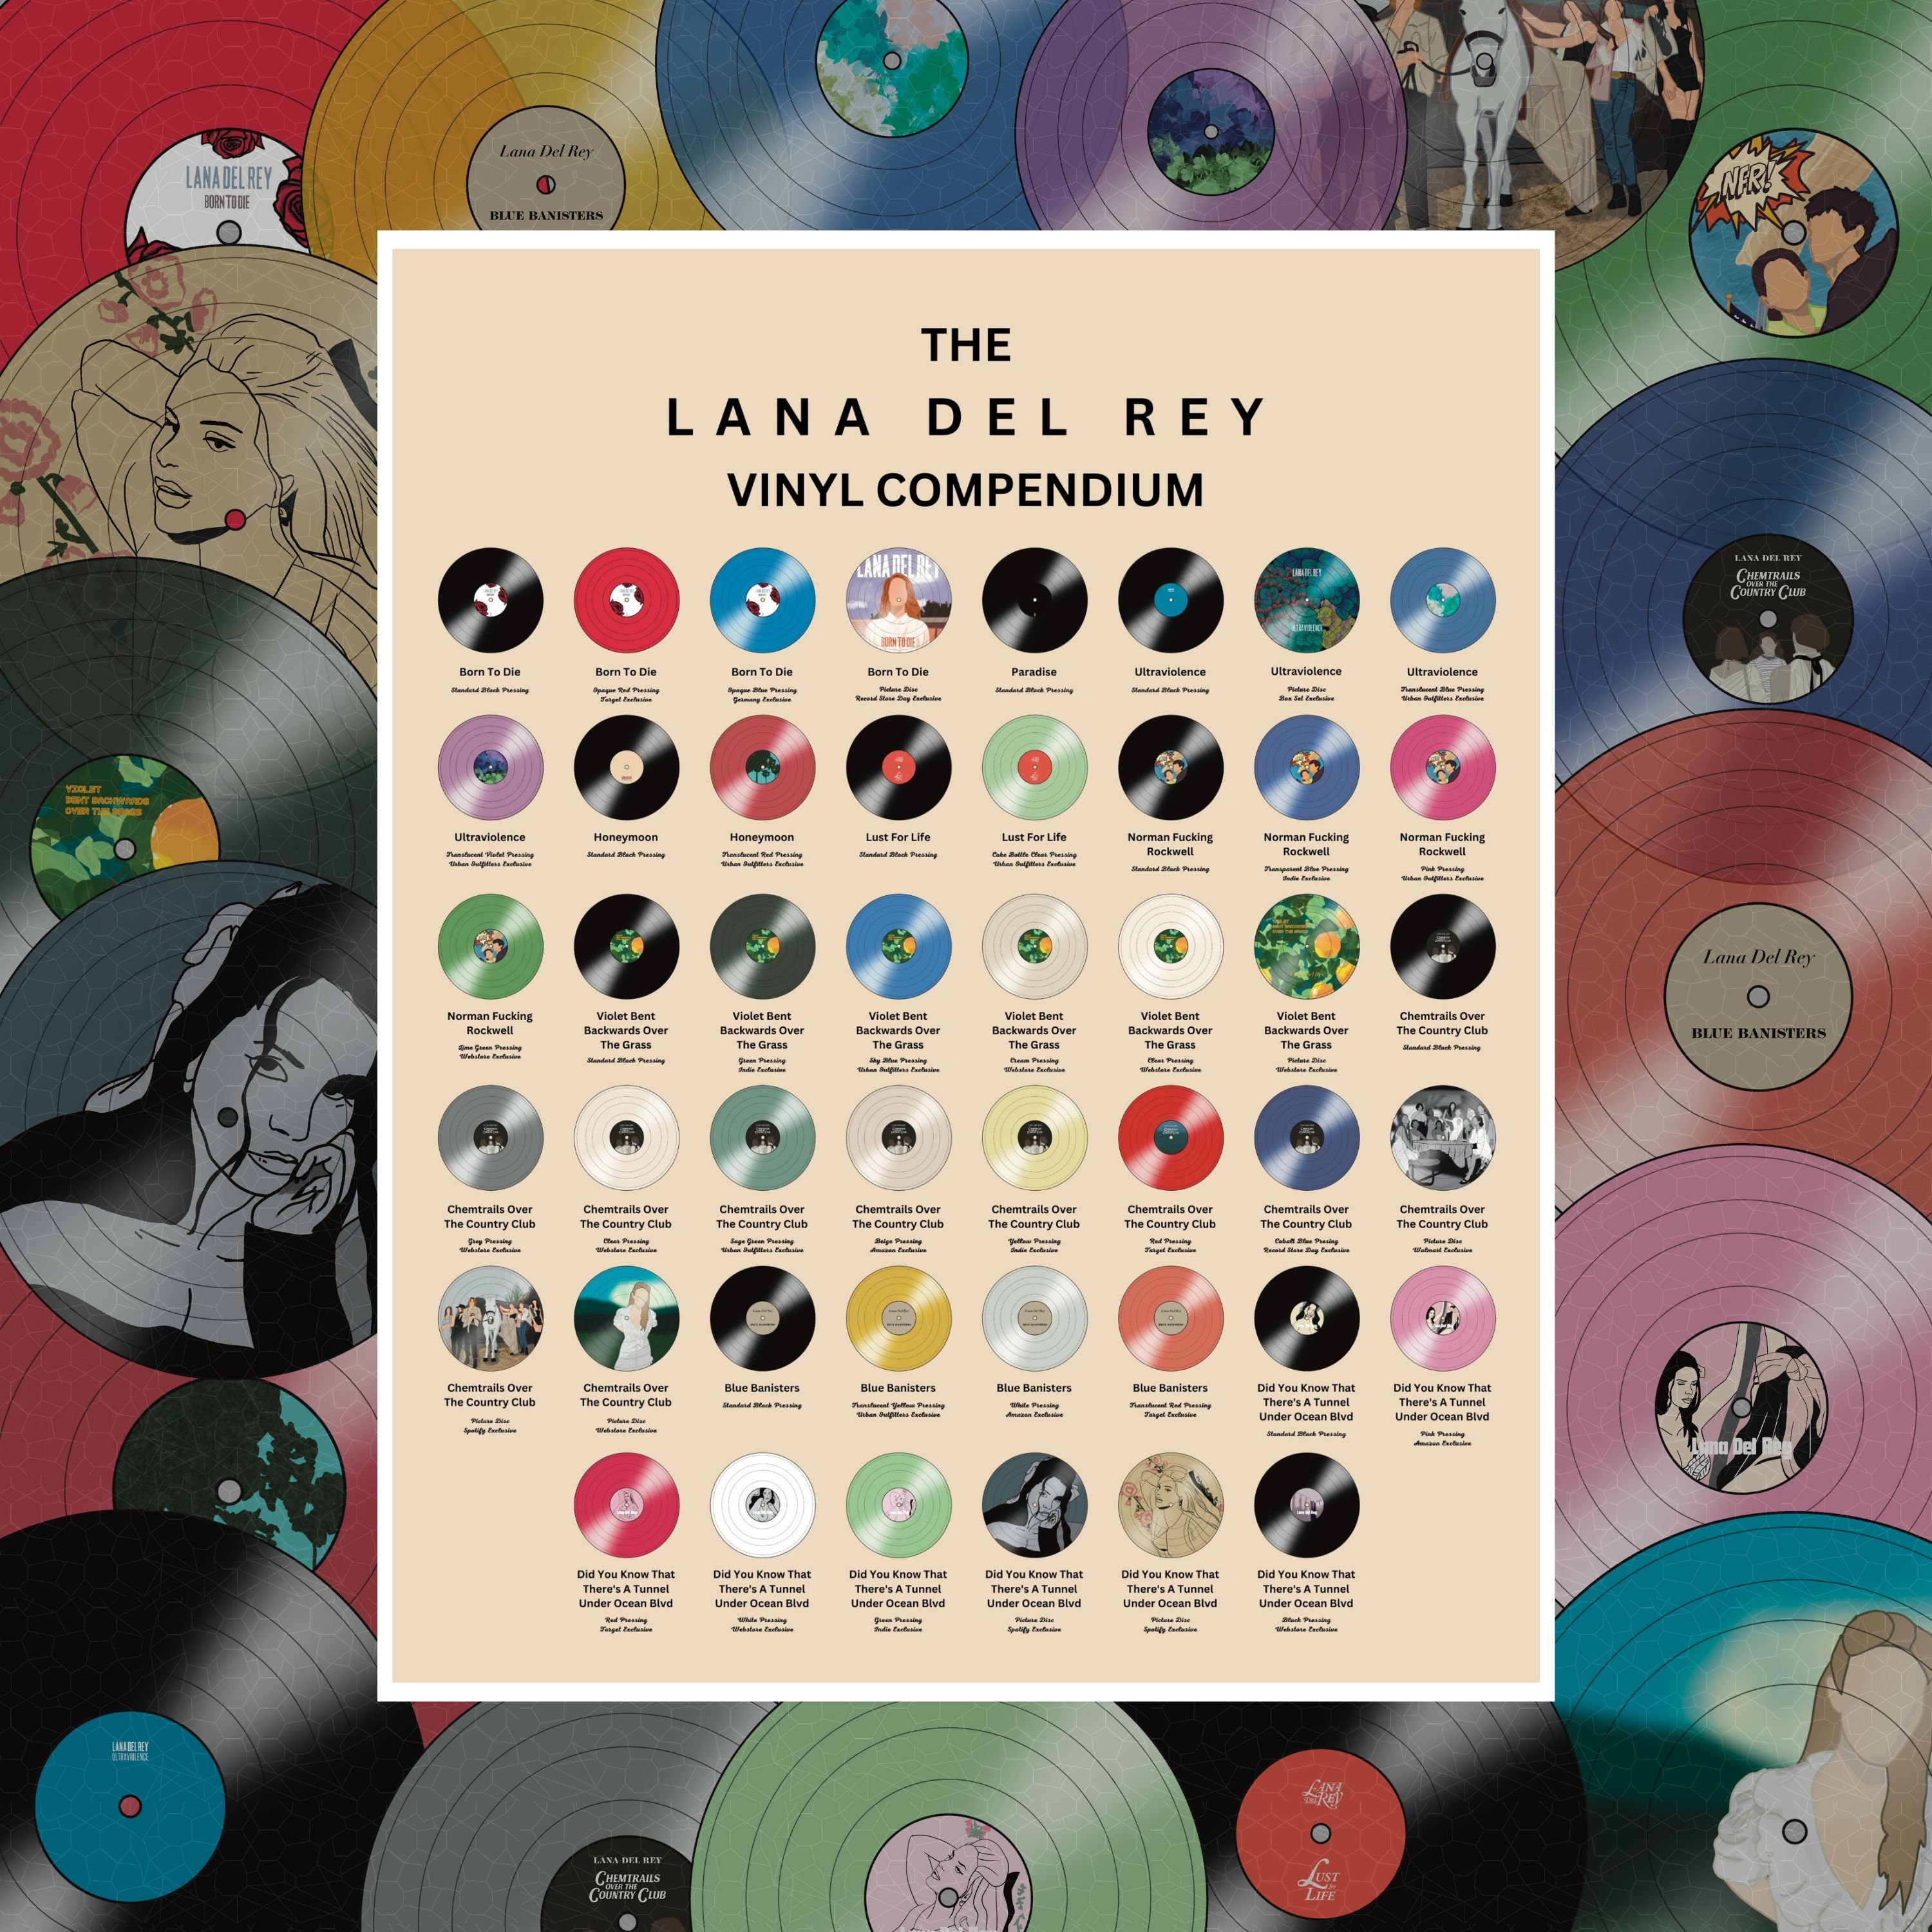 Lana Del Rey Blue Banisters Target Exclusive LP Vinyl Red - ES